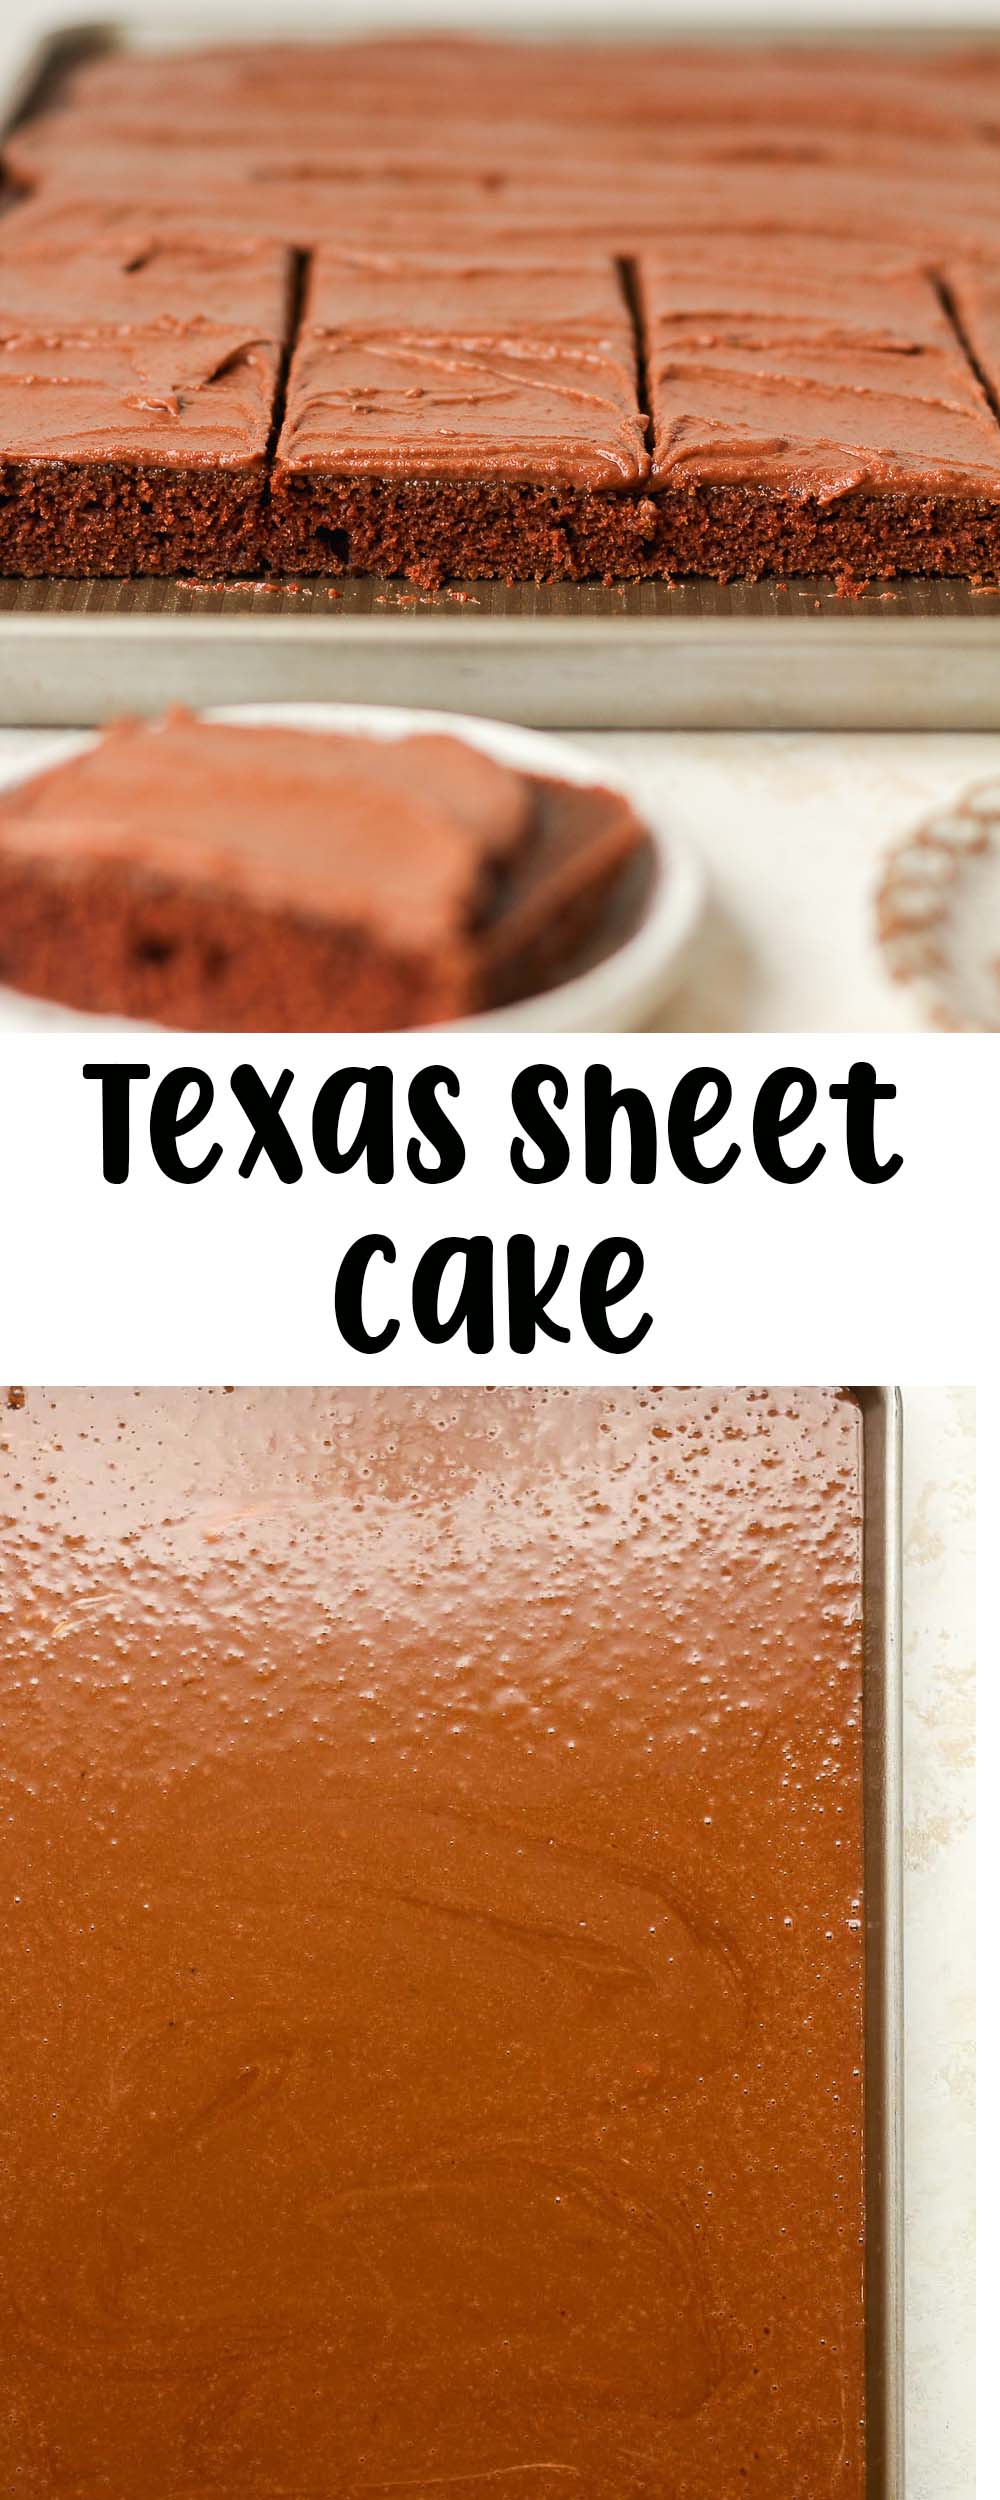 Two photos of Texas Sheet Cake.